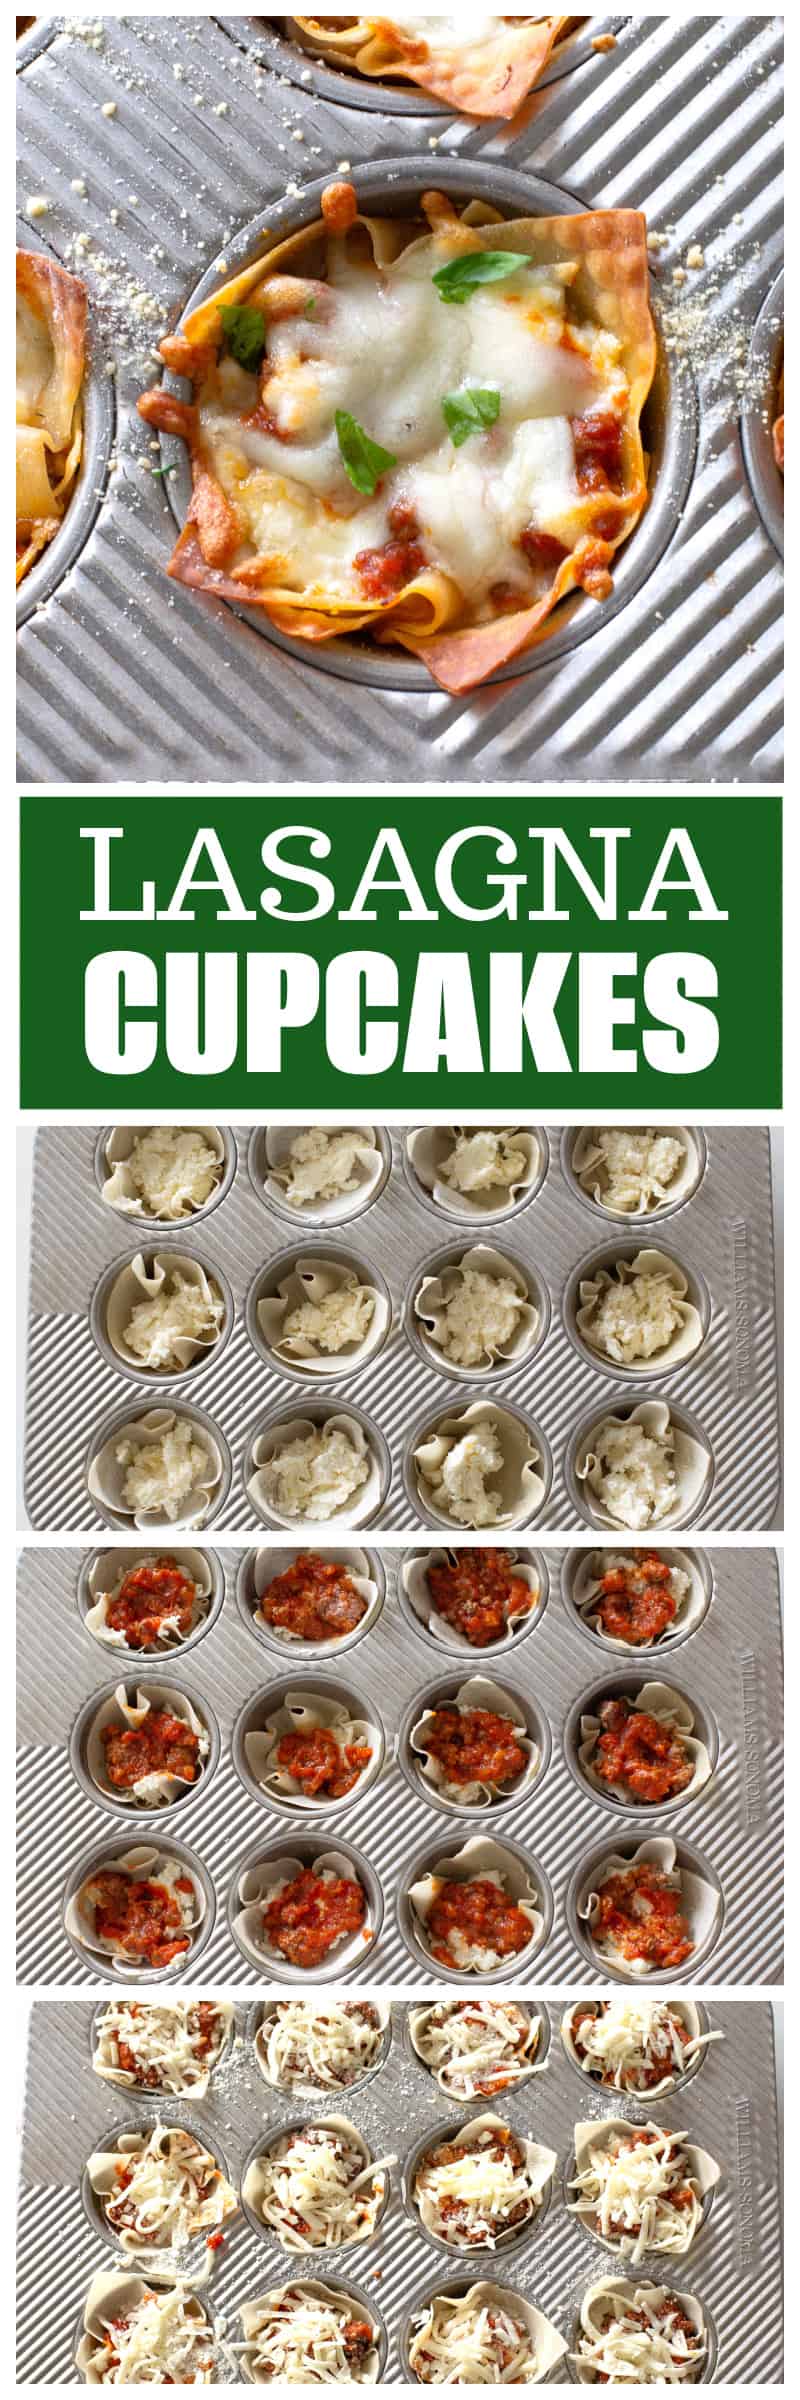 lasagna cupcakes